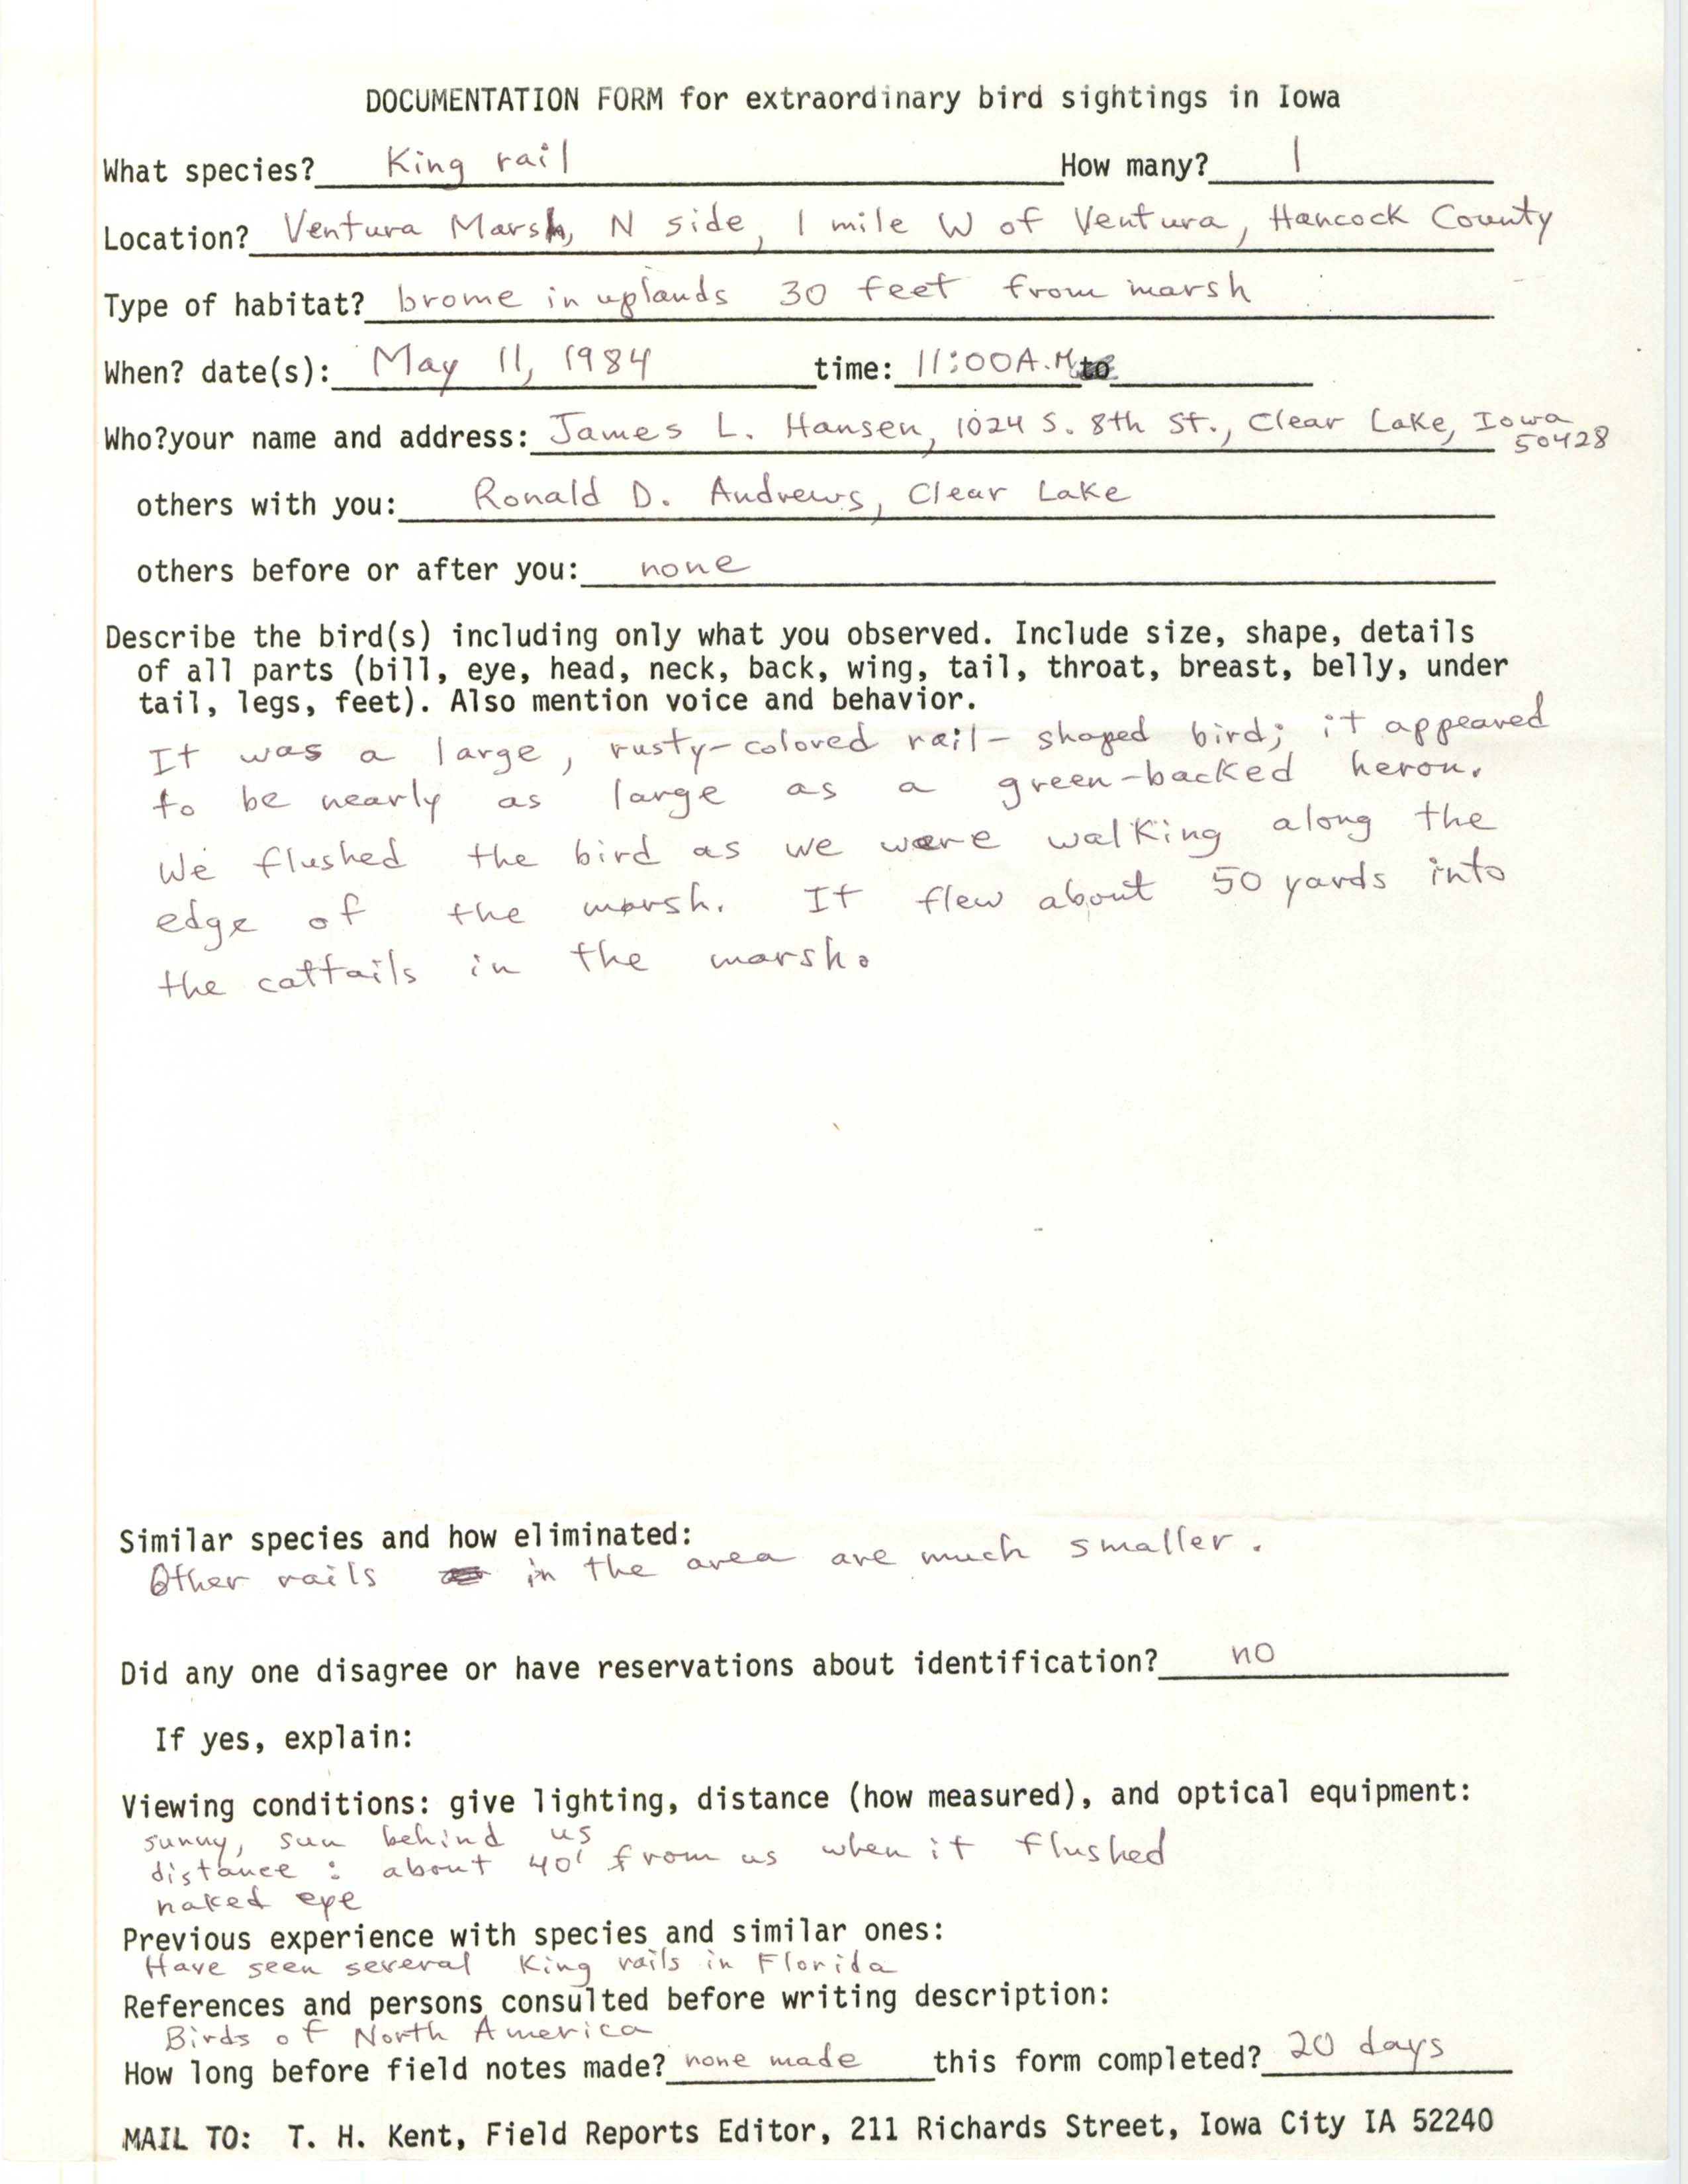 Rare bird documentation form for King Rail at Ventura Marsh, 1984